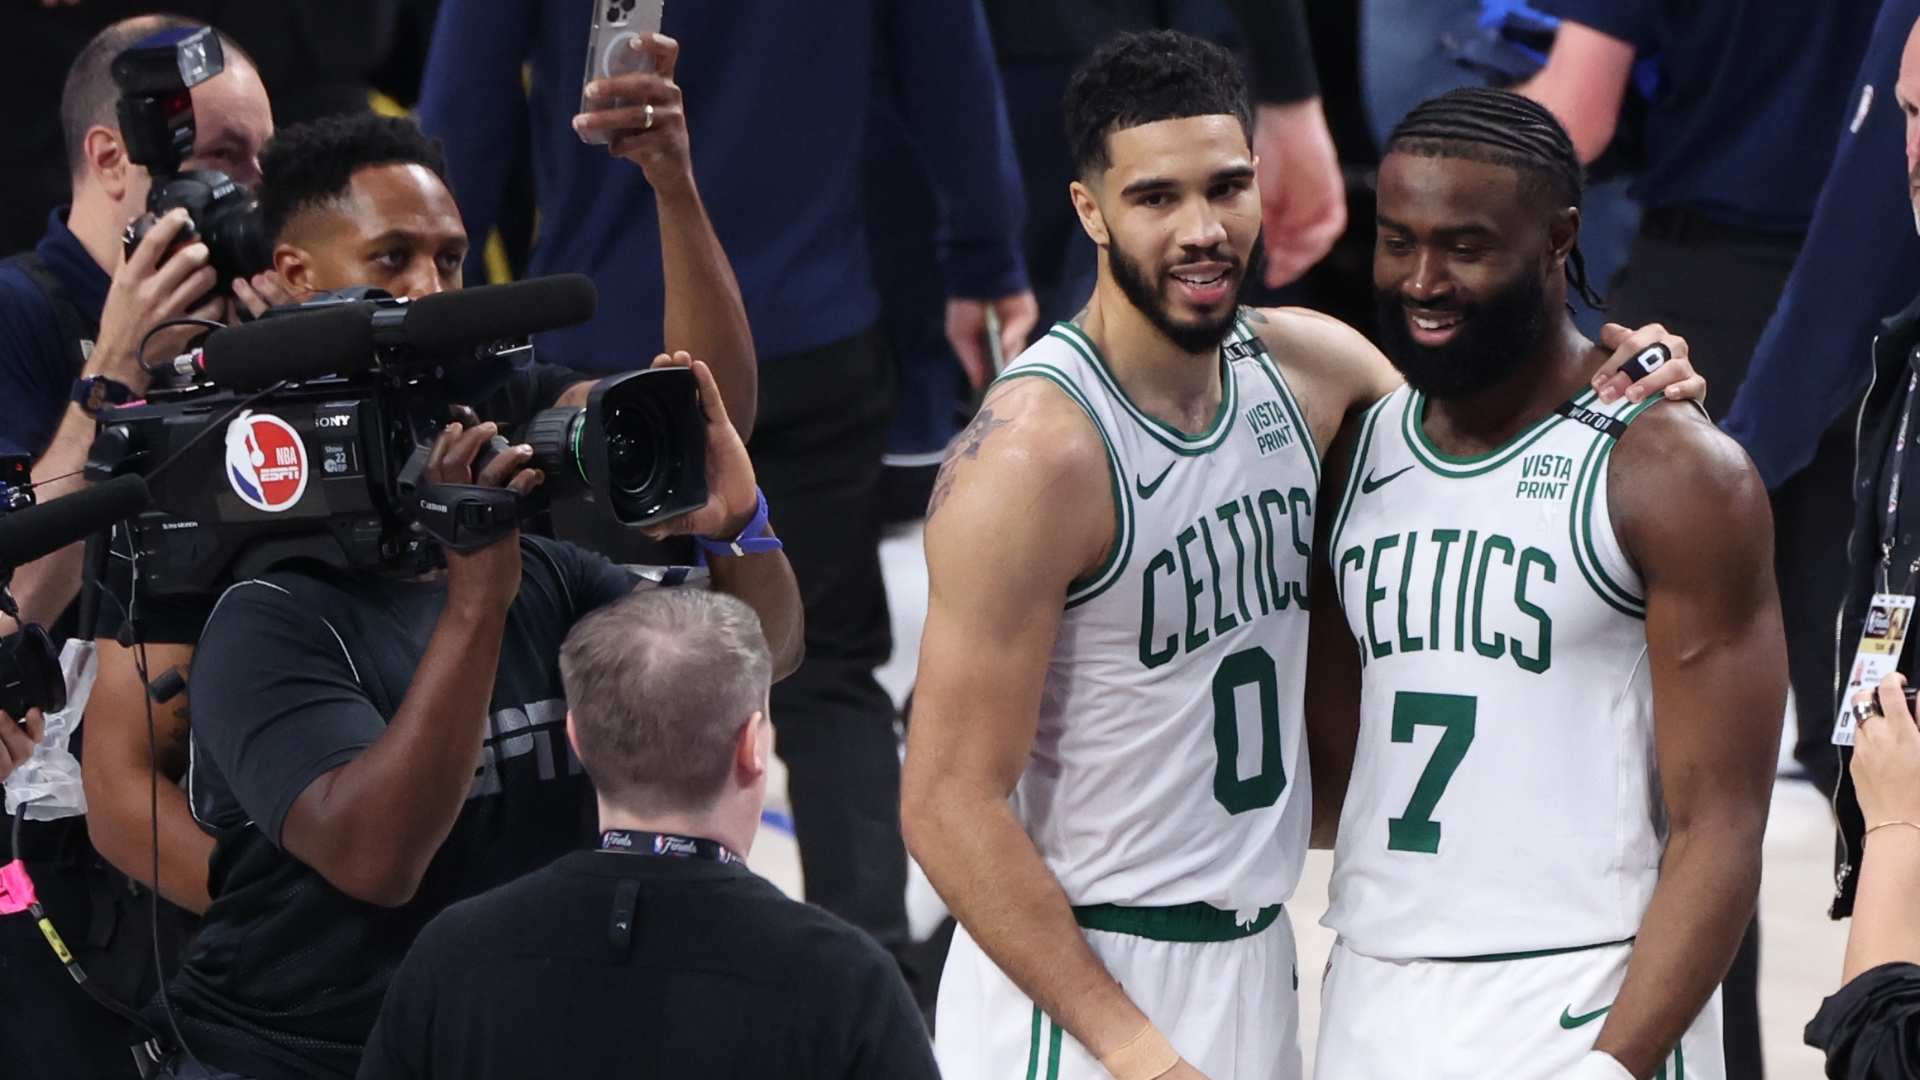 Celtics survive furious 4th quarter to win Game 3